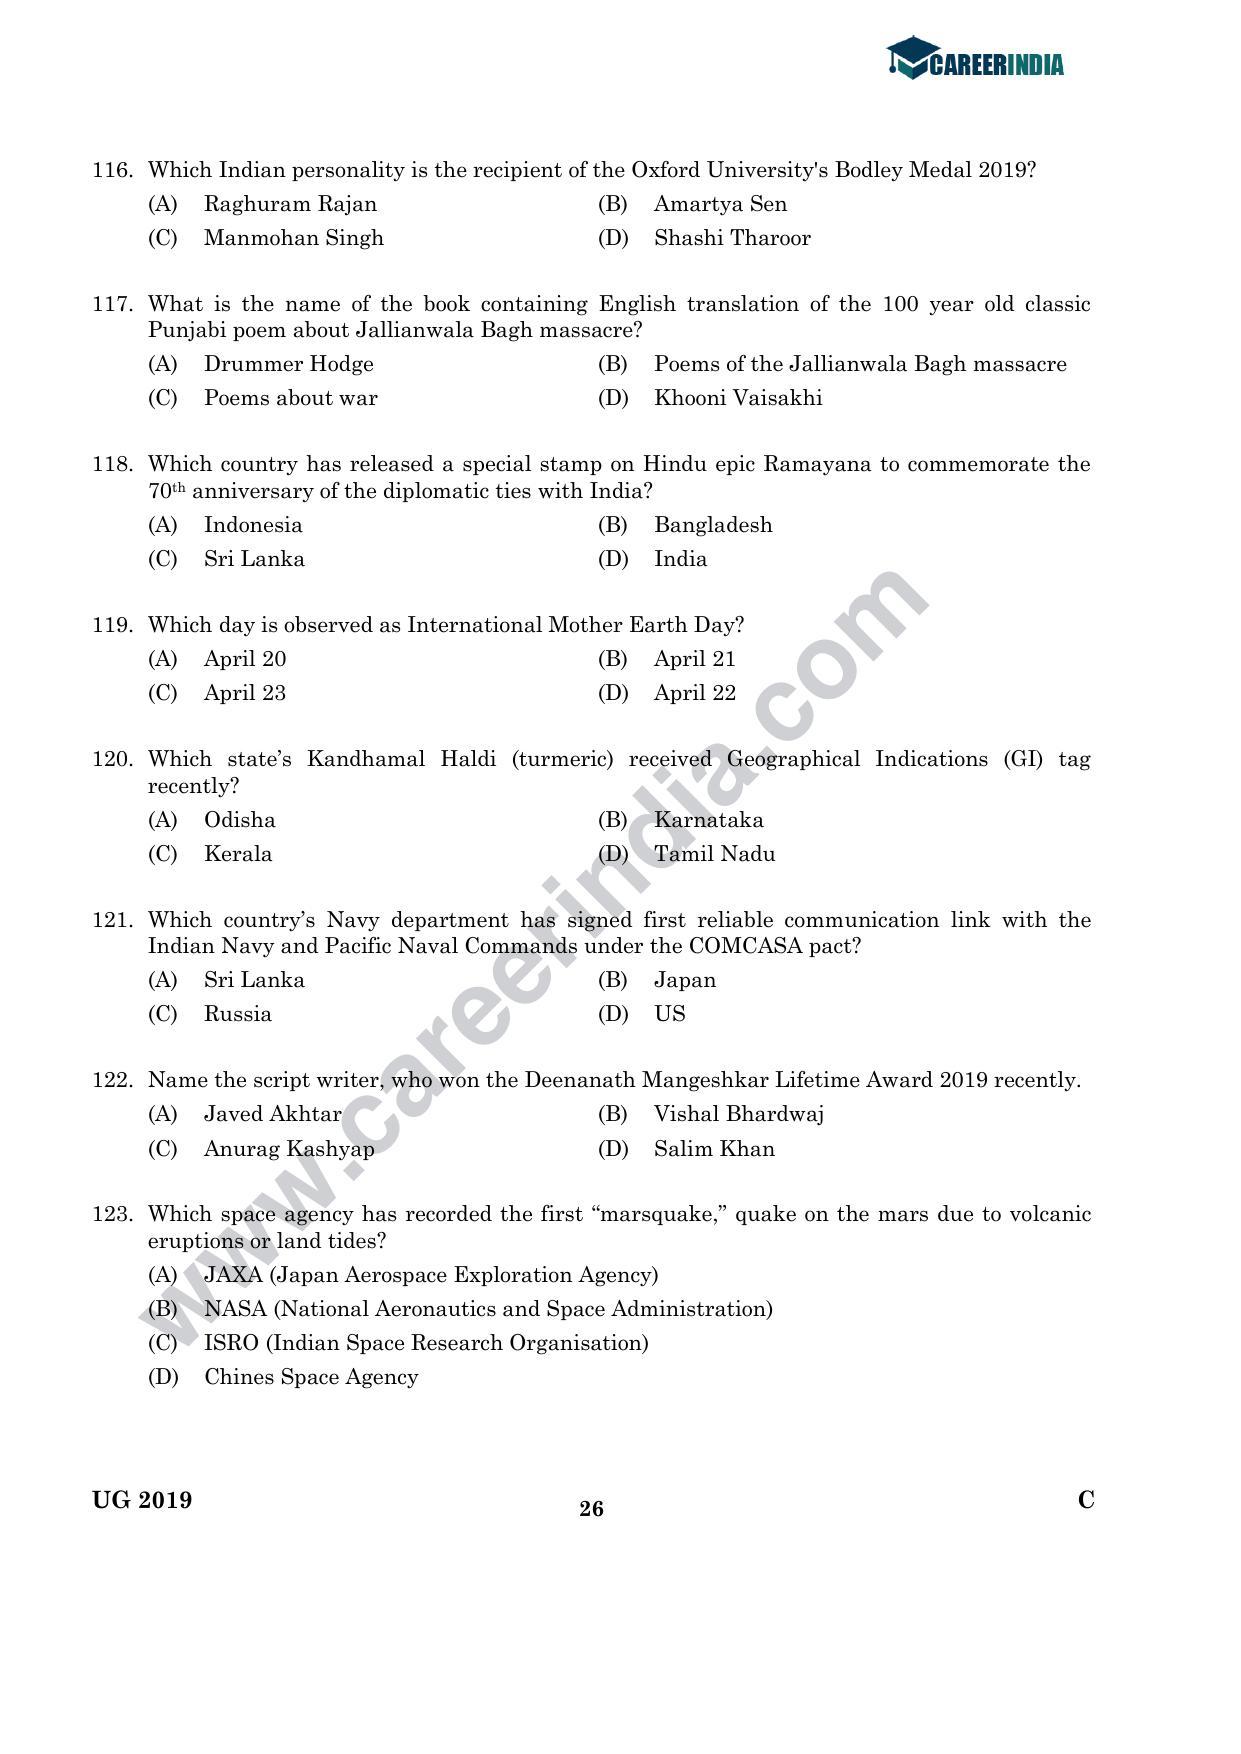 CLAT 2019 UG Legal-Aptitude Question Paper - Page 25